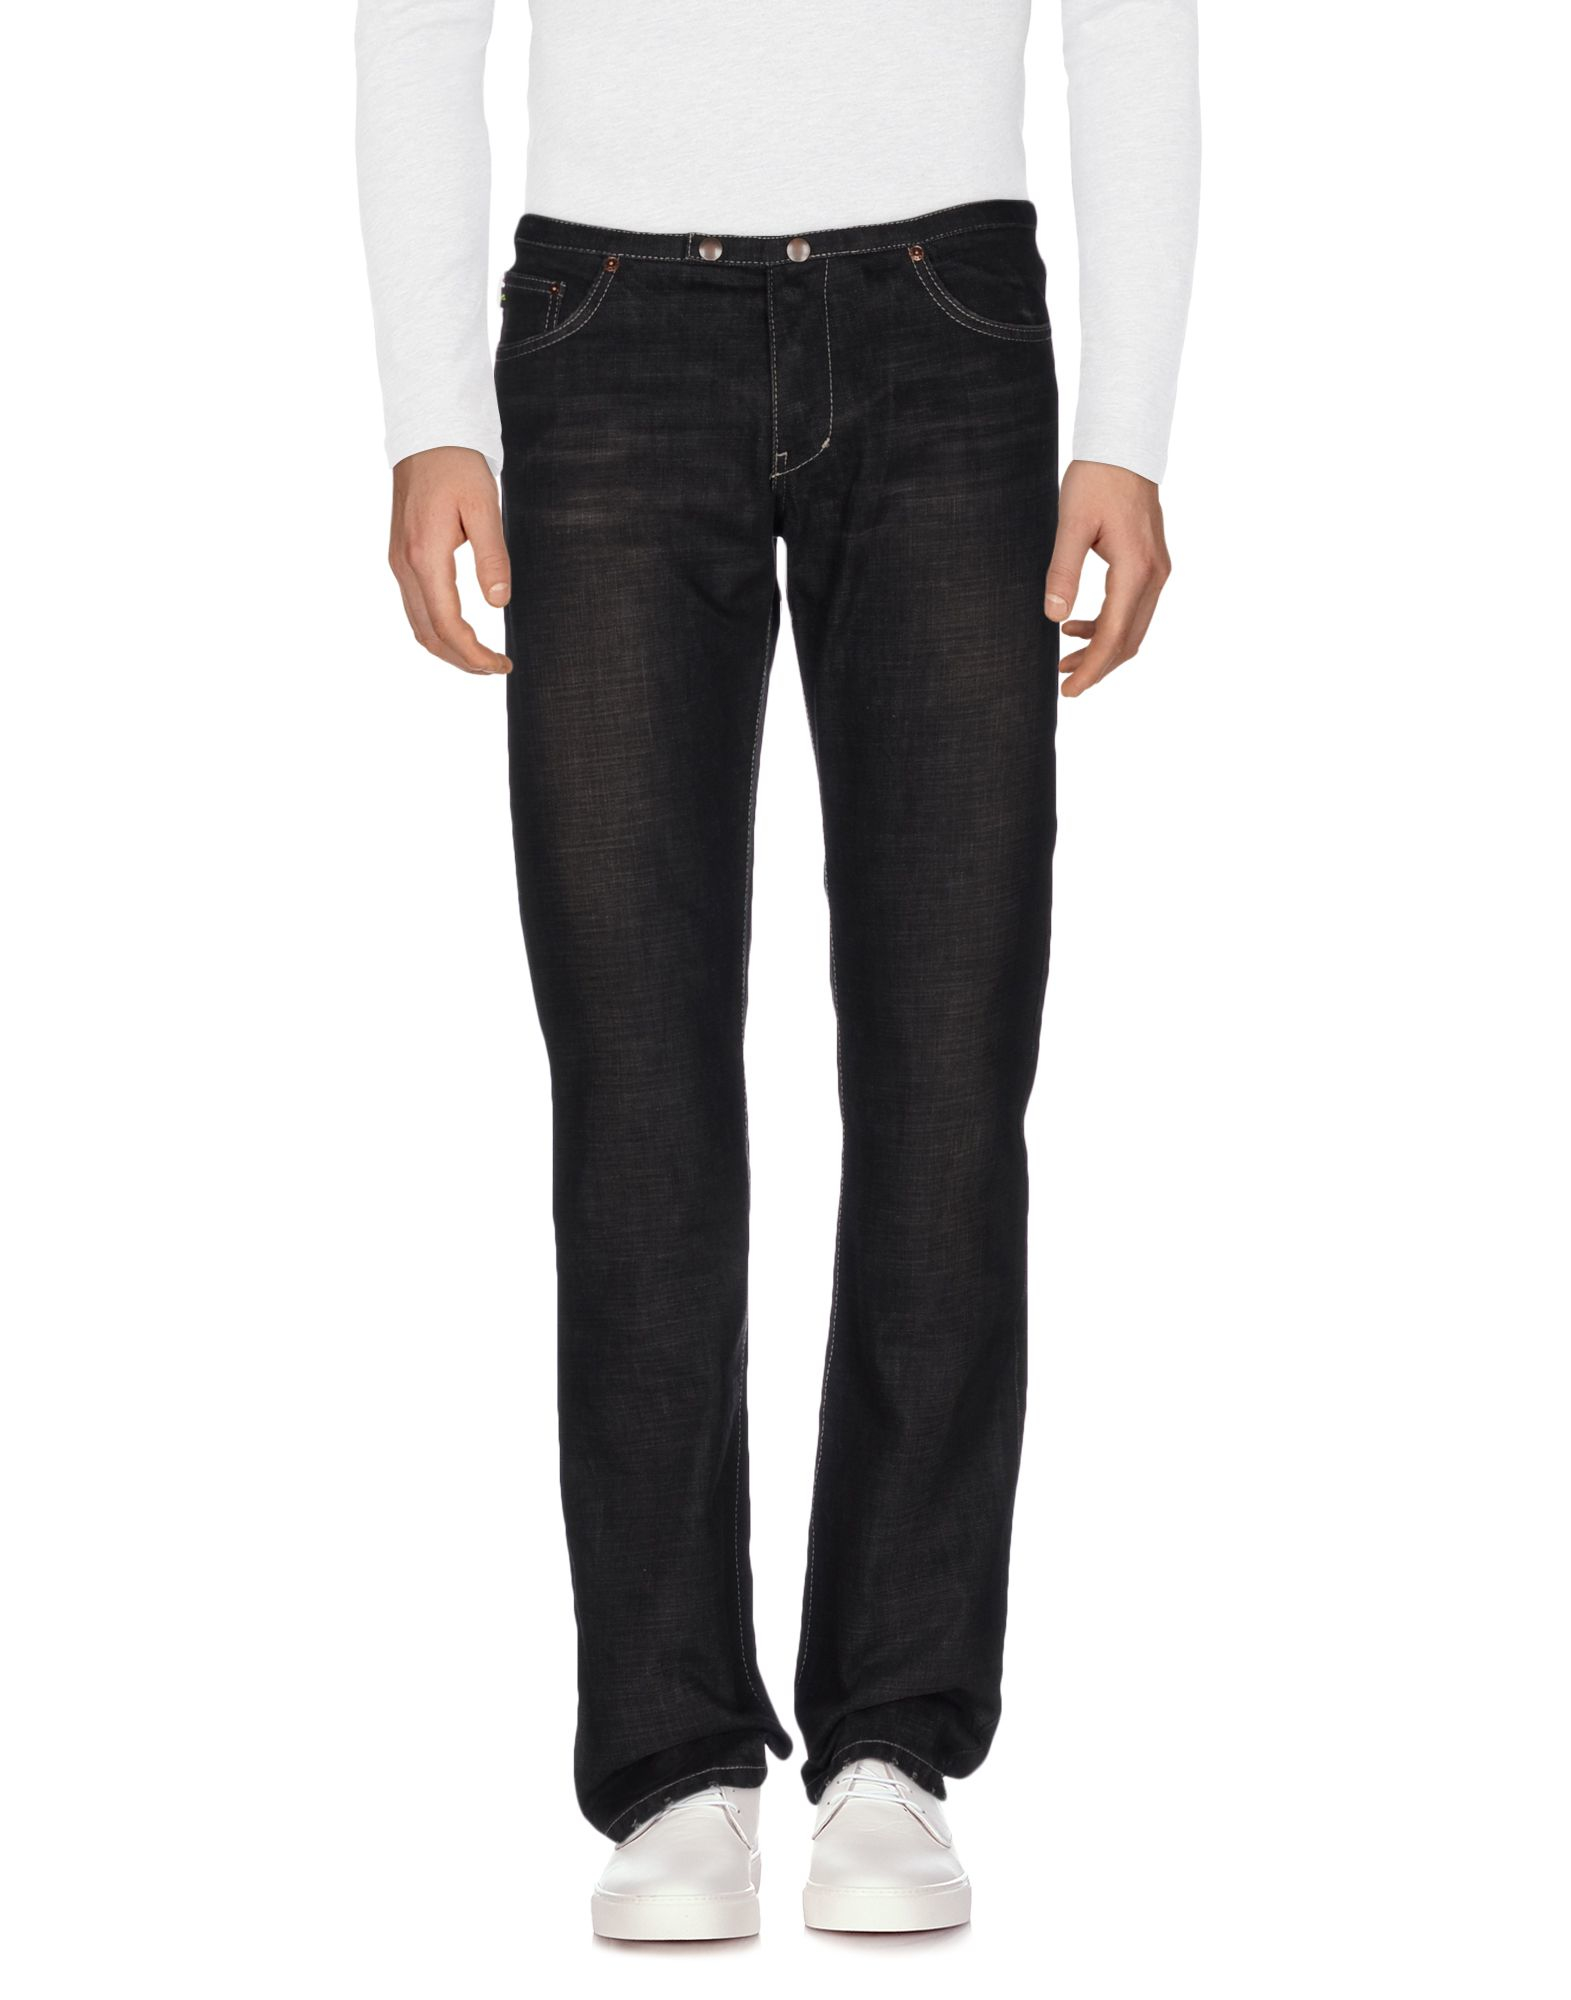 Lyst - DKNY Denim Trousers in Black for Men